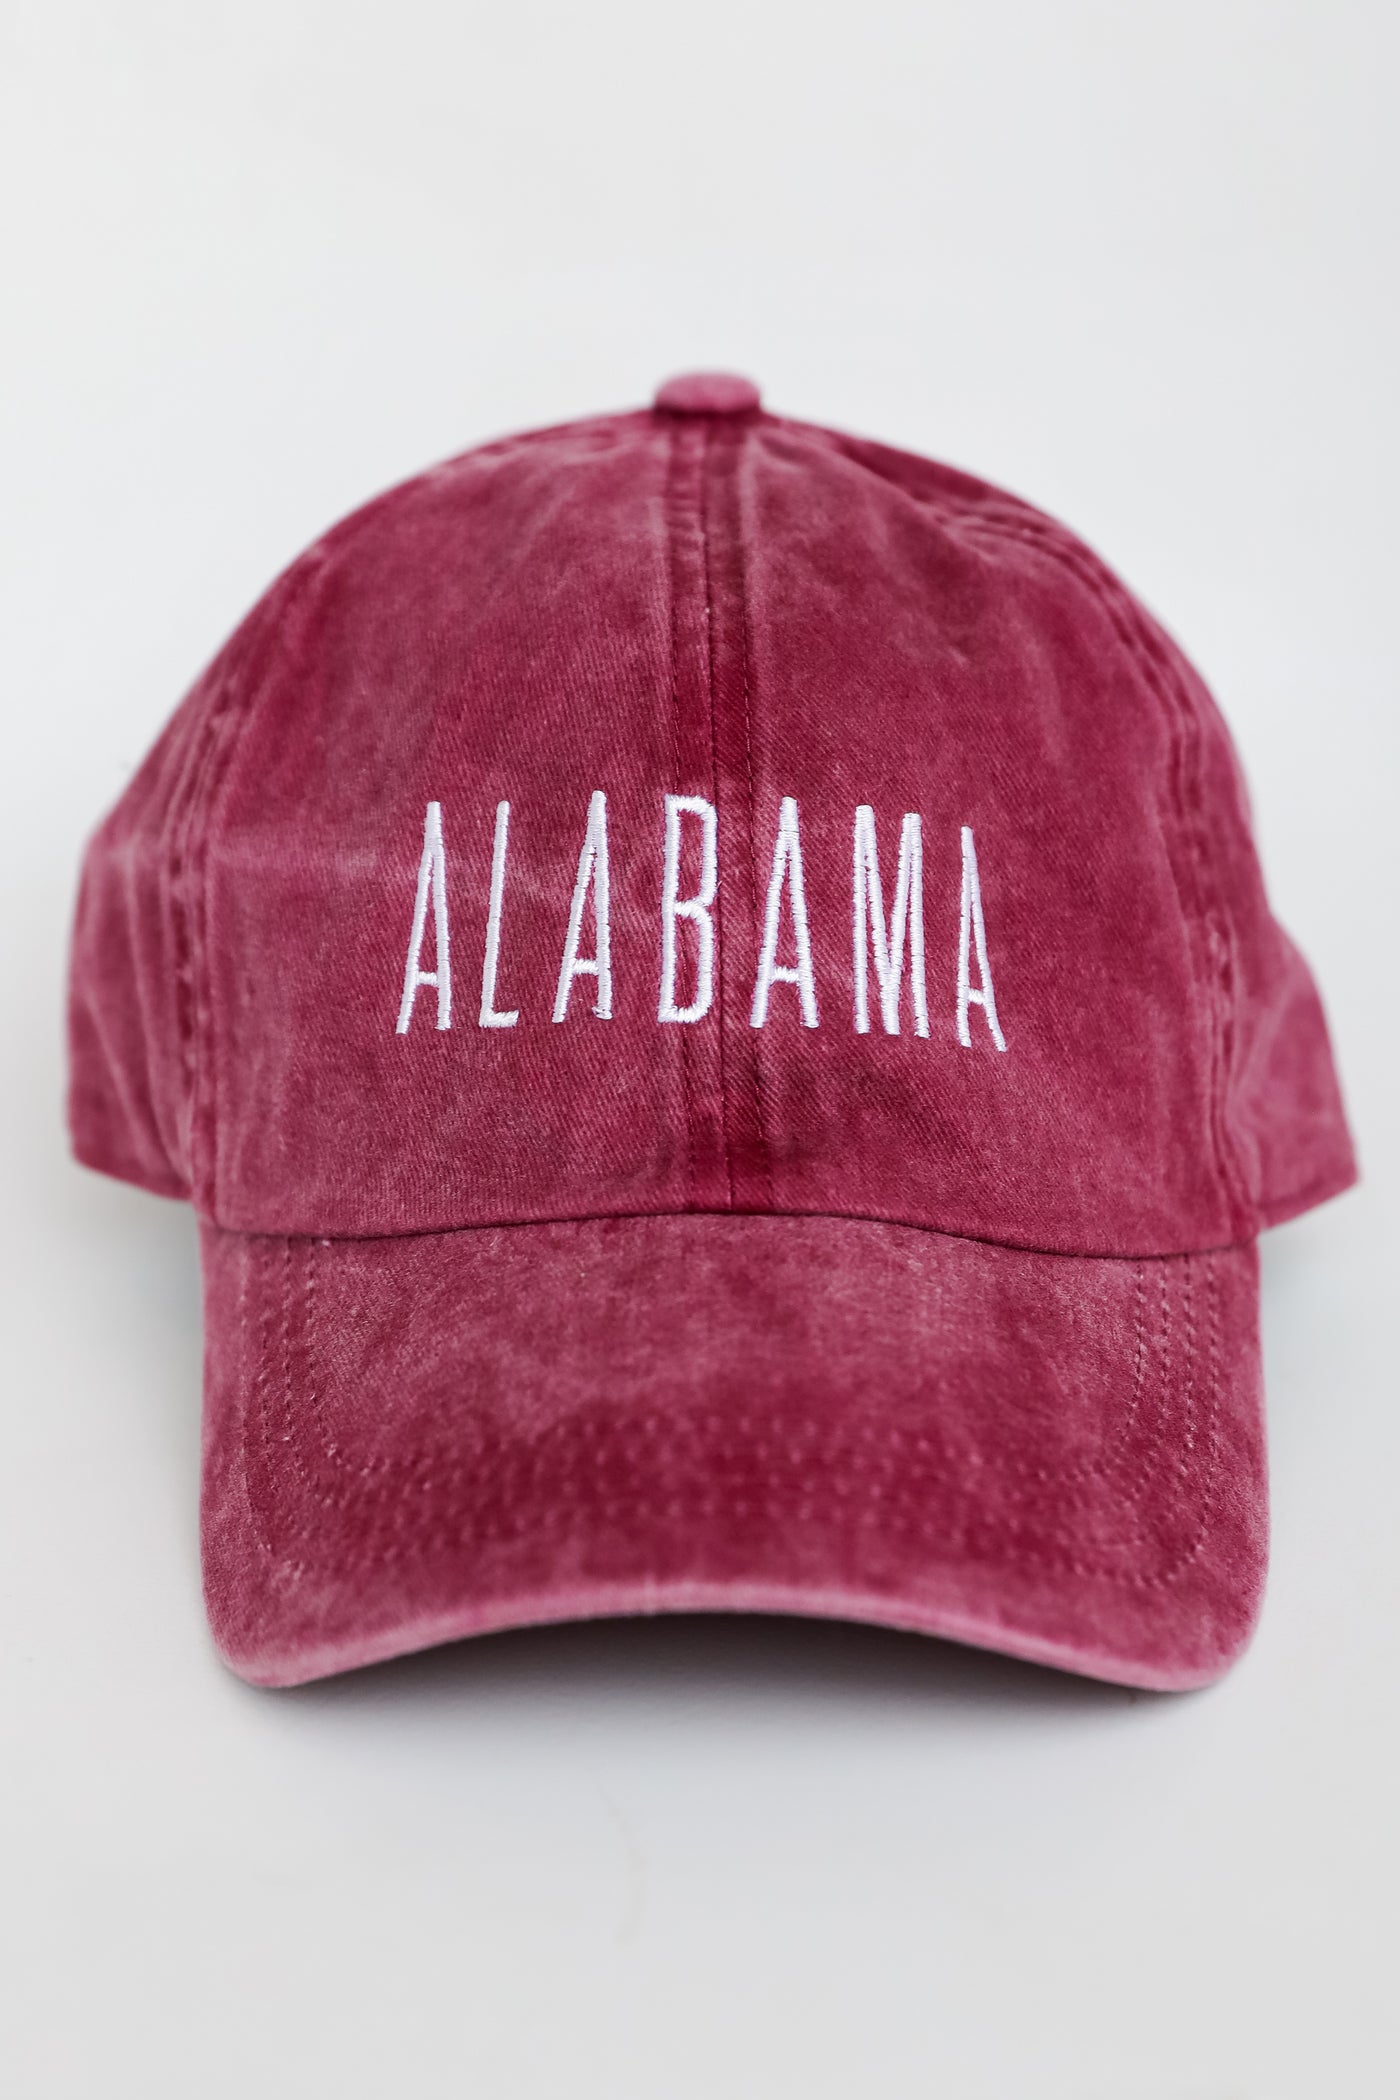 Alabama Vintage Embroidered Hat flat lay